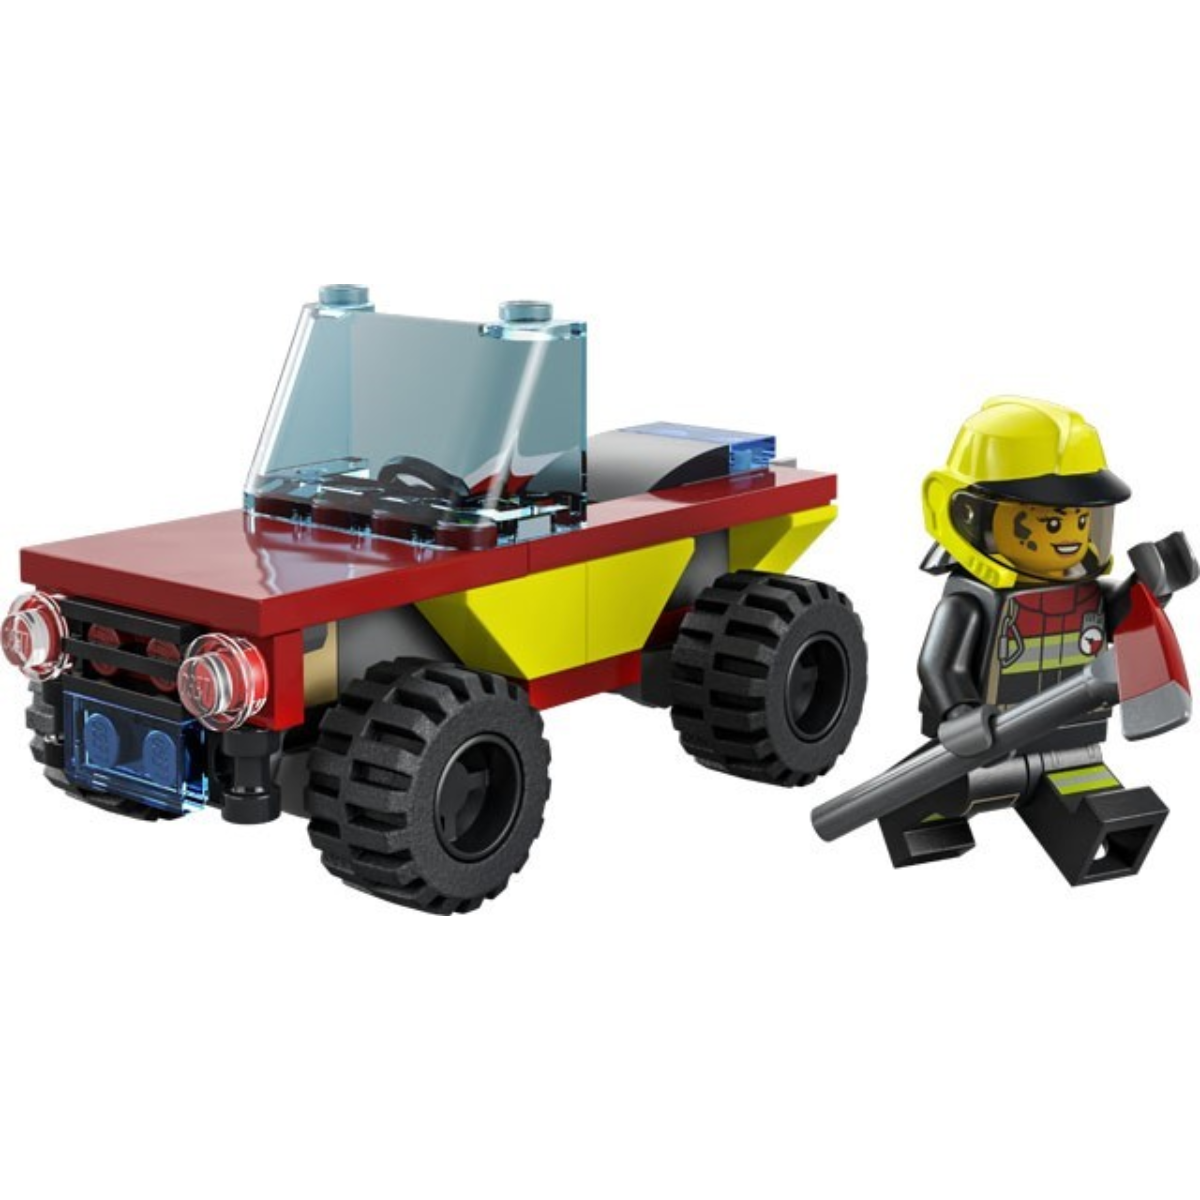 Lego Fire Patrol Vehicle